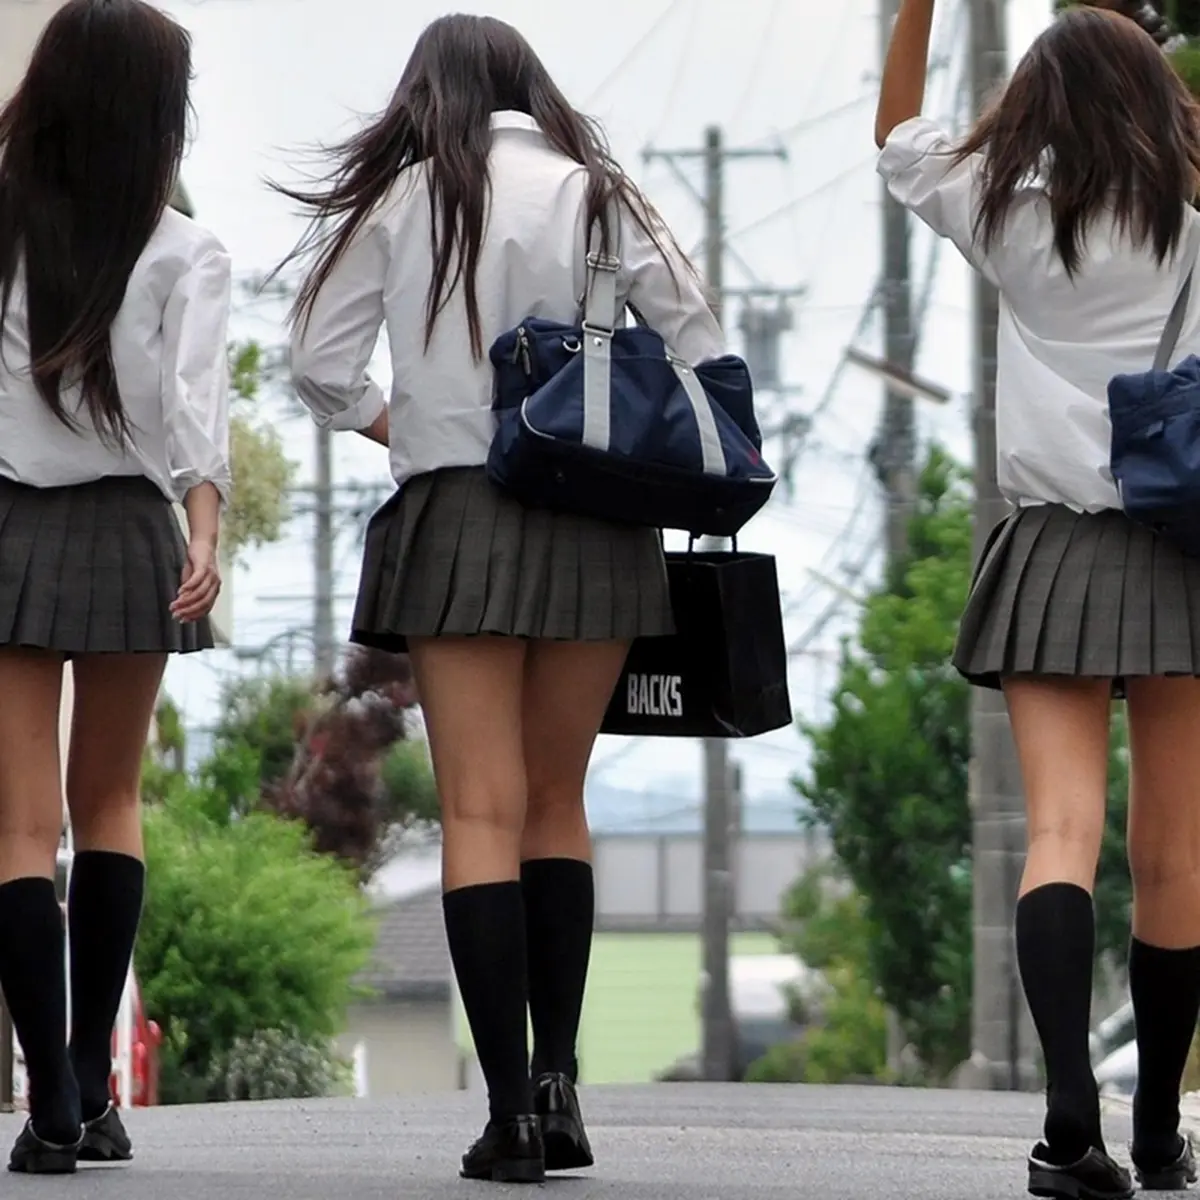 Indo Porno Xxx Anak Umur 10 Tahun - Usia 13 Tahun, Remaja Sudah Legal Bercinta di Jepang - Health Liputan6.com